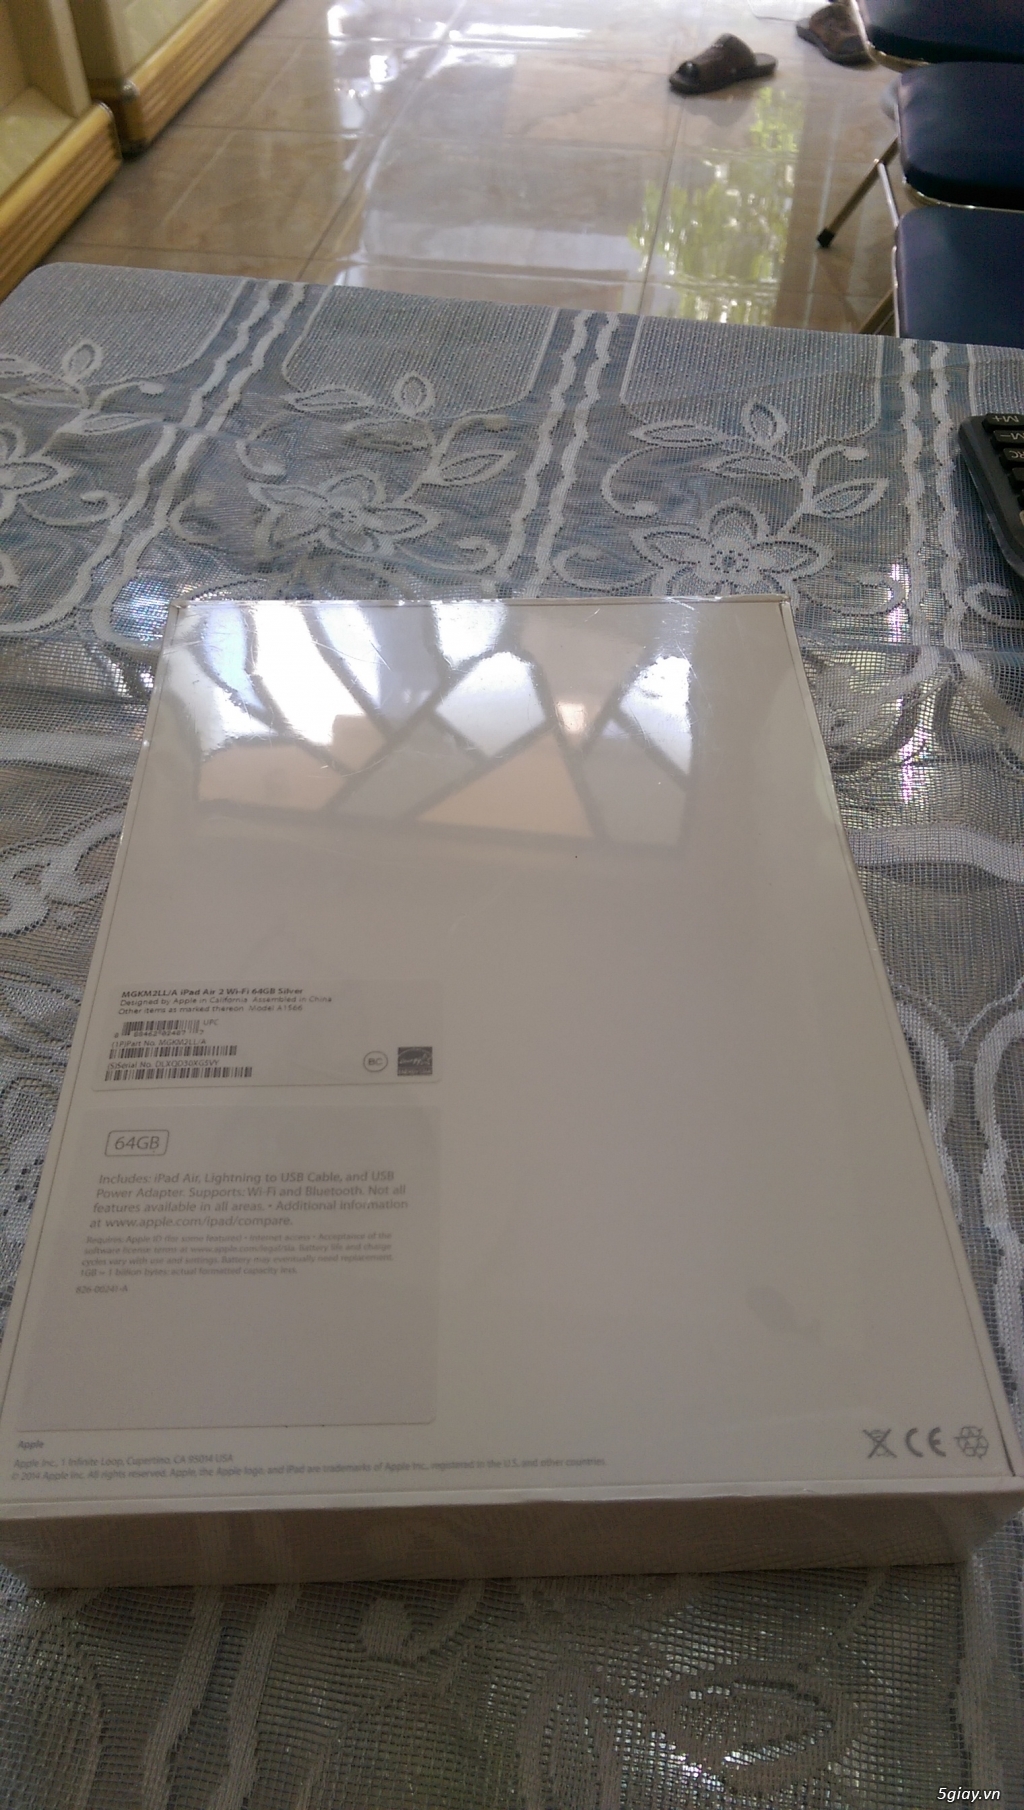 Ipad Air 2 Wifi 64GB Silver Full box nguyên seal chưa active. - 1